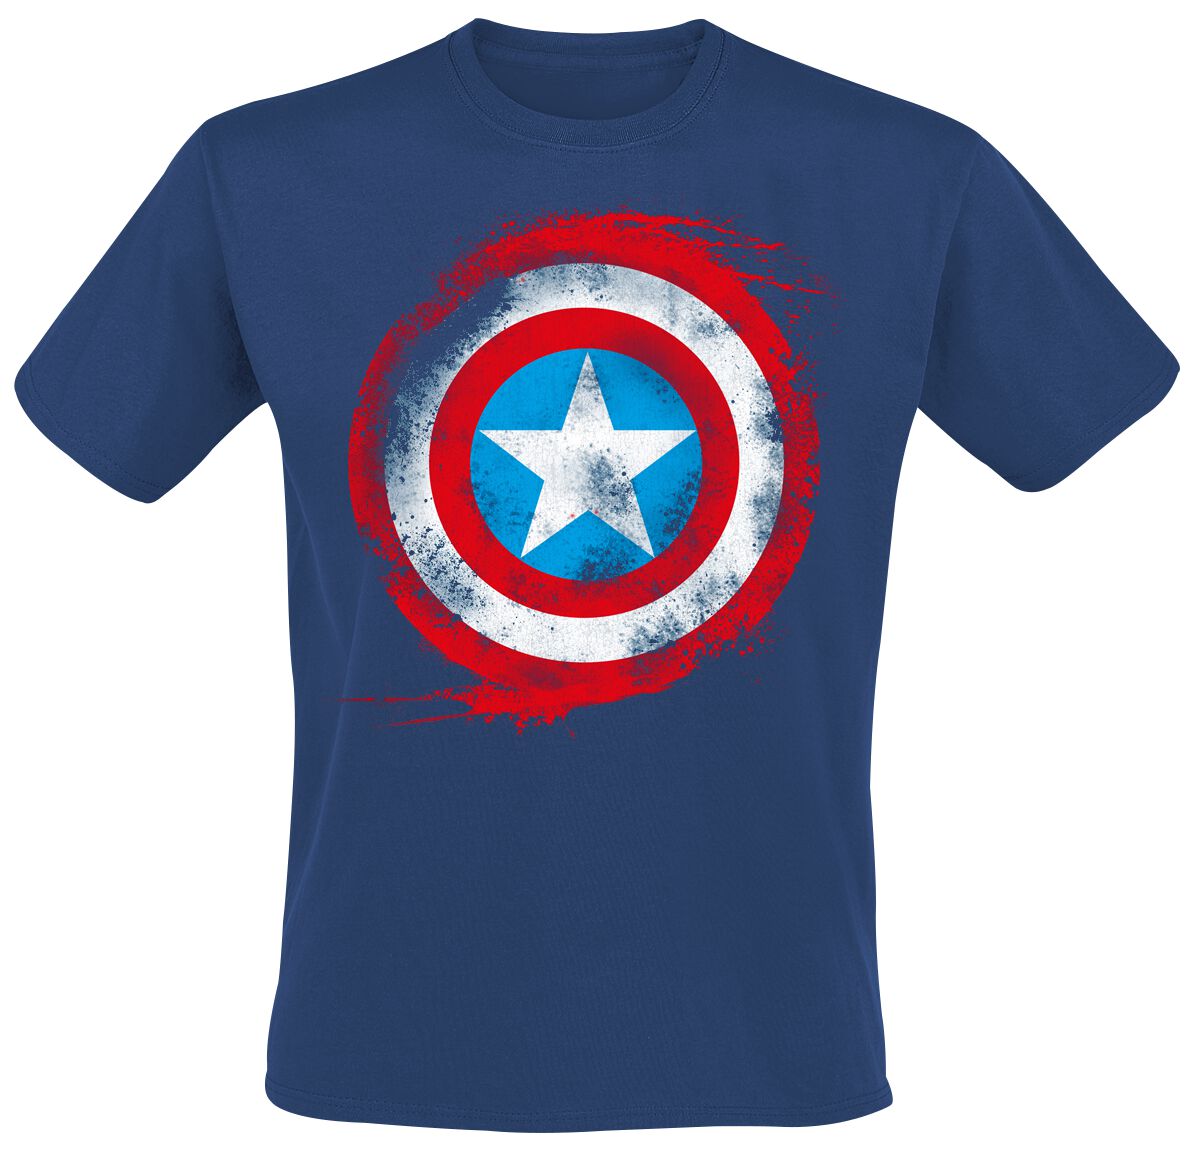 Капитан бренд. Marvel logo Futbolka. Perry Ellis t Shirt. Captain America logo.